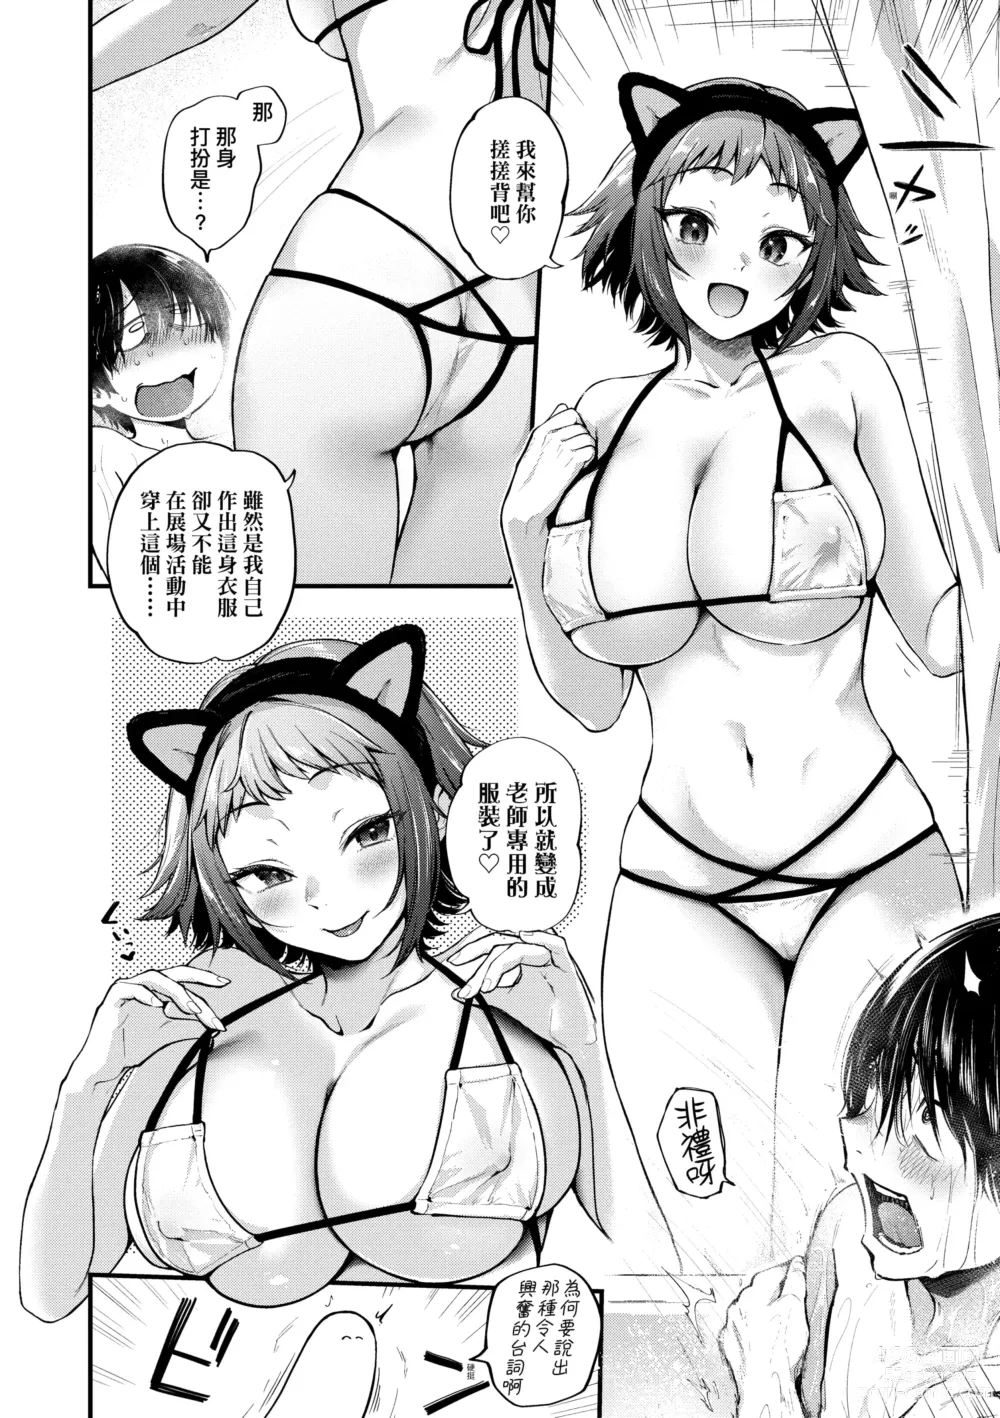 Page 220 of manga 同人作家夢想著能夠角色扮演SEX 特裝版 (decensored)